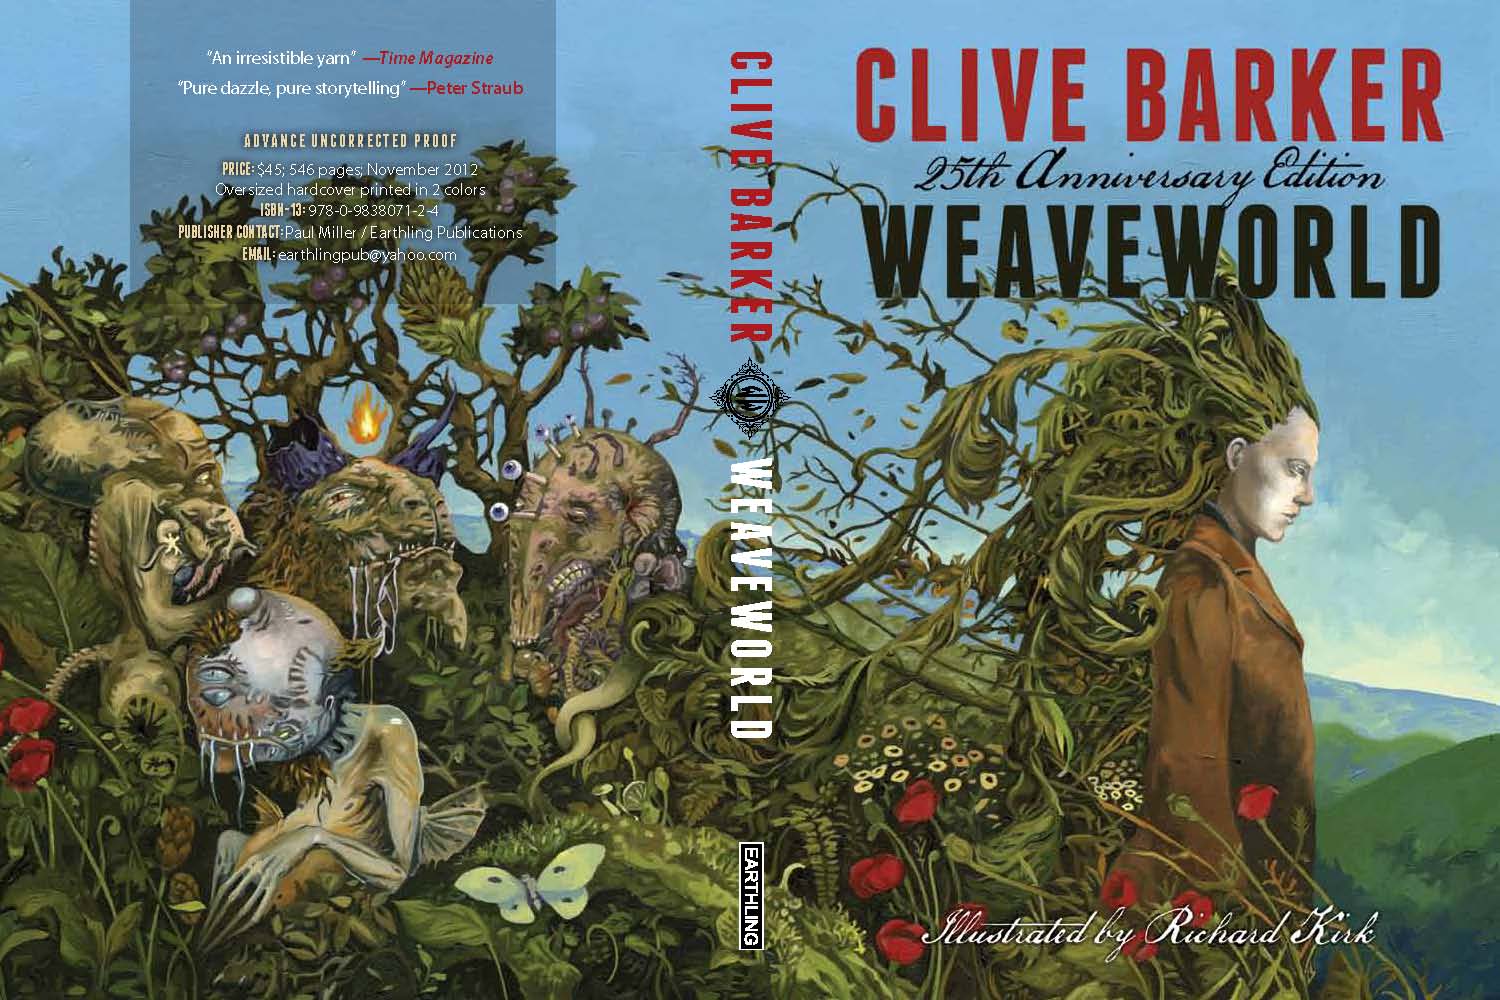 Weaveworld - 25th Anniversary edition (art - Richard Kirk)